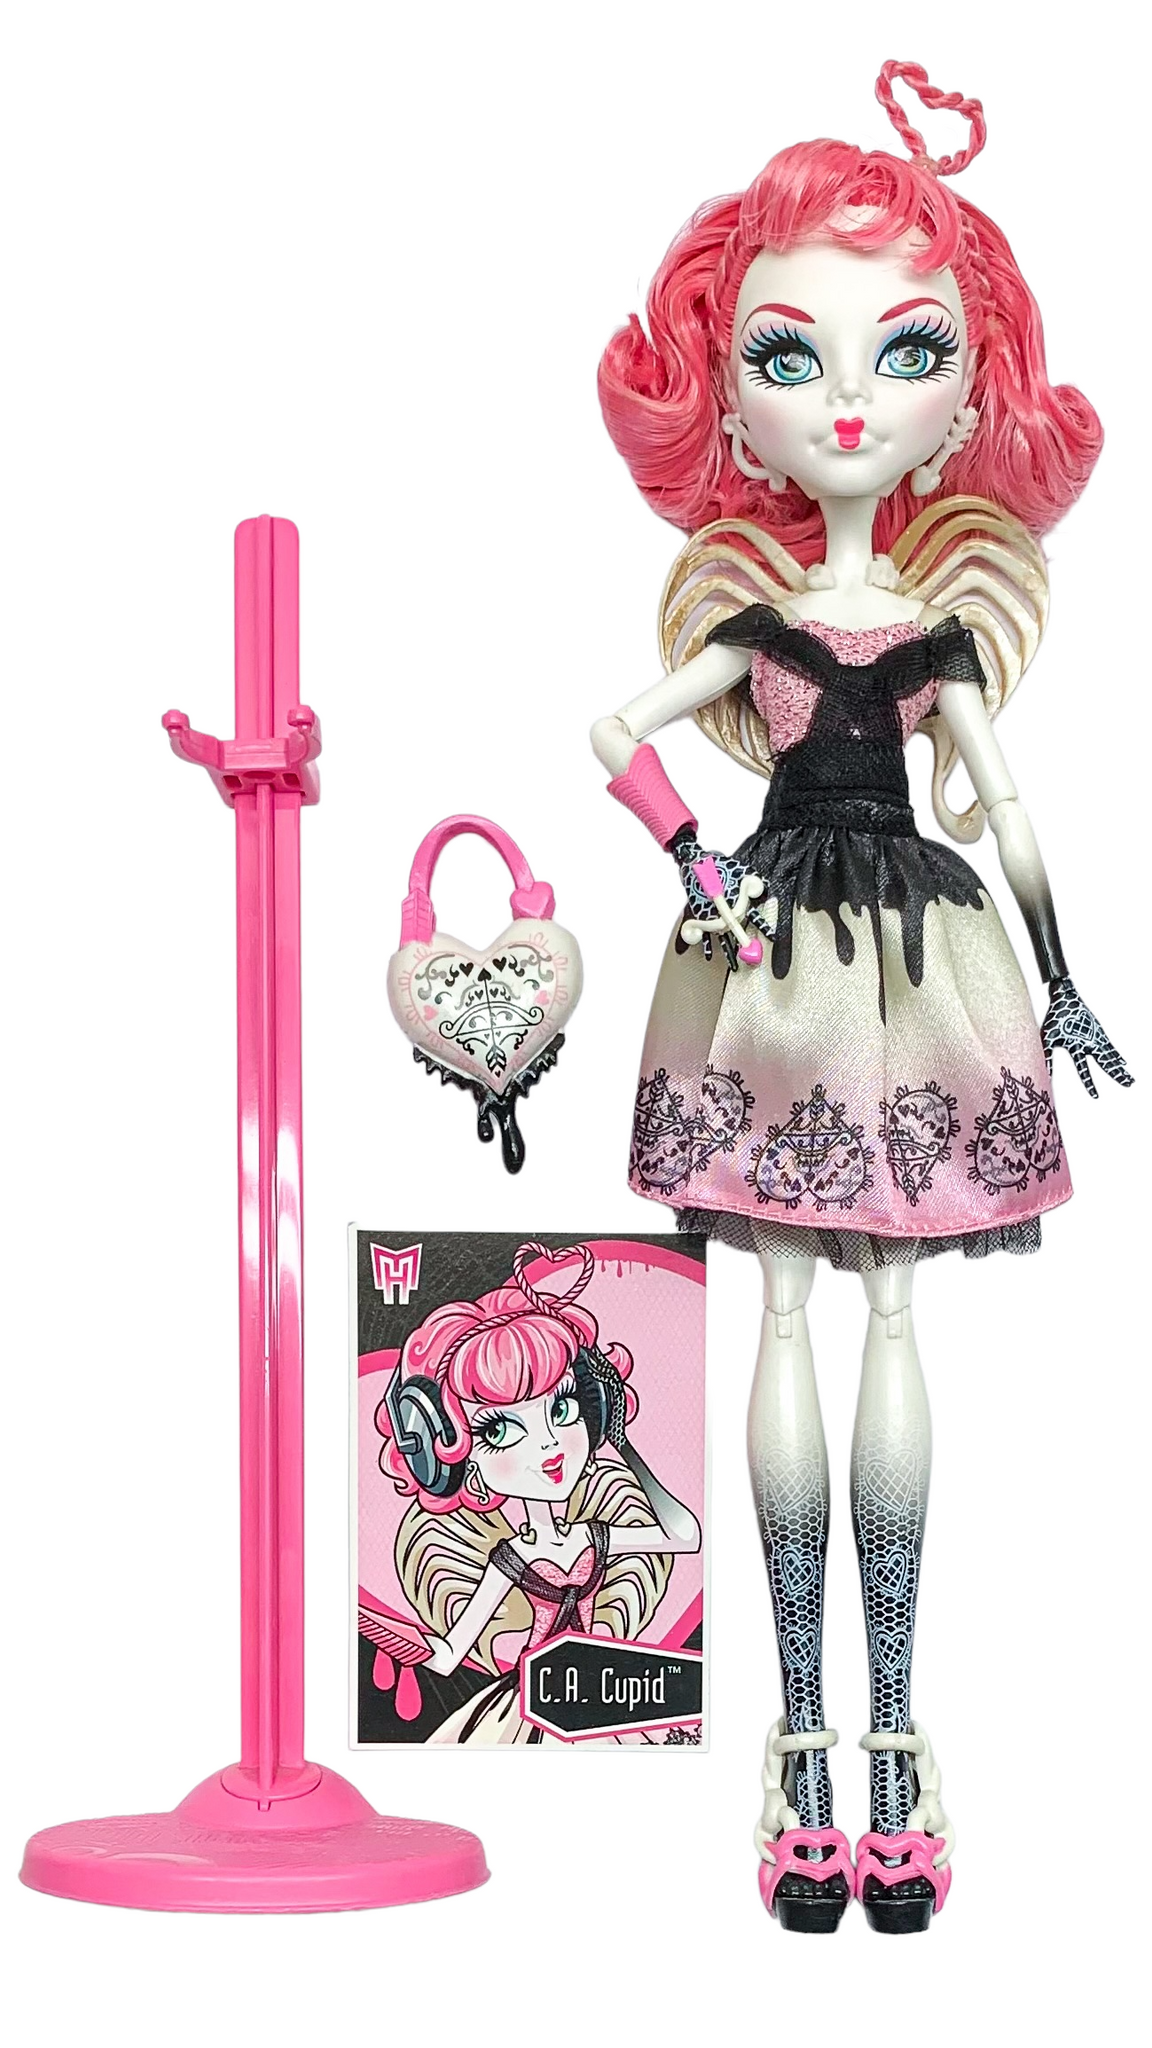 C.A. Cupid (G1)  Monster high dolls, Monster high art, Monster high  characters